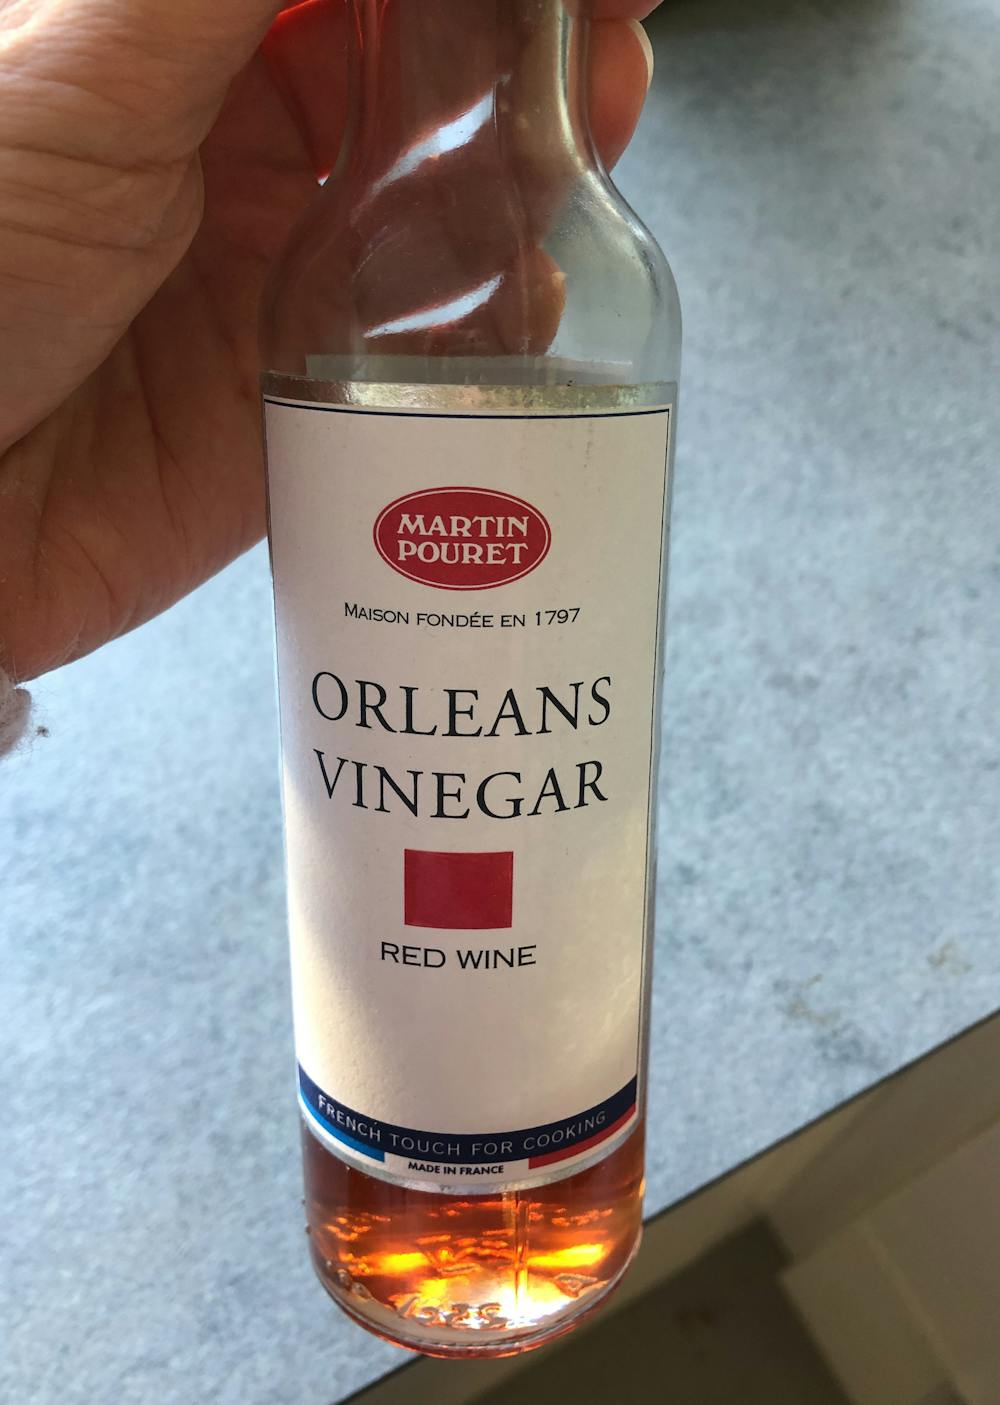 Orleans vinegar, red wine, Martin Pouret